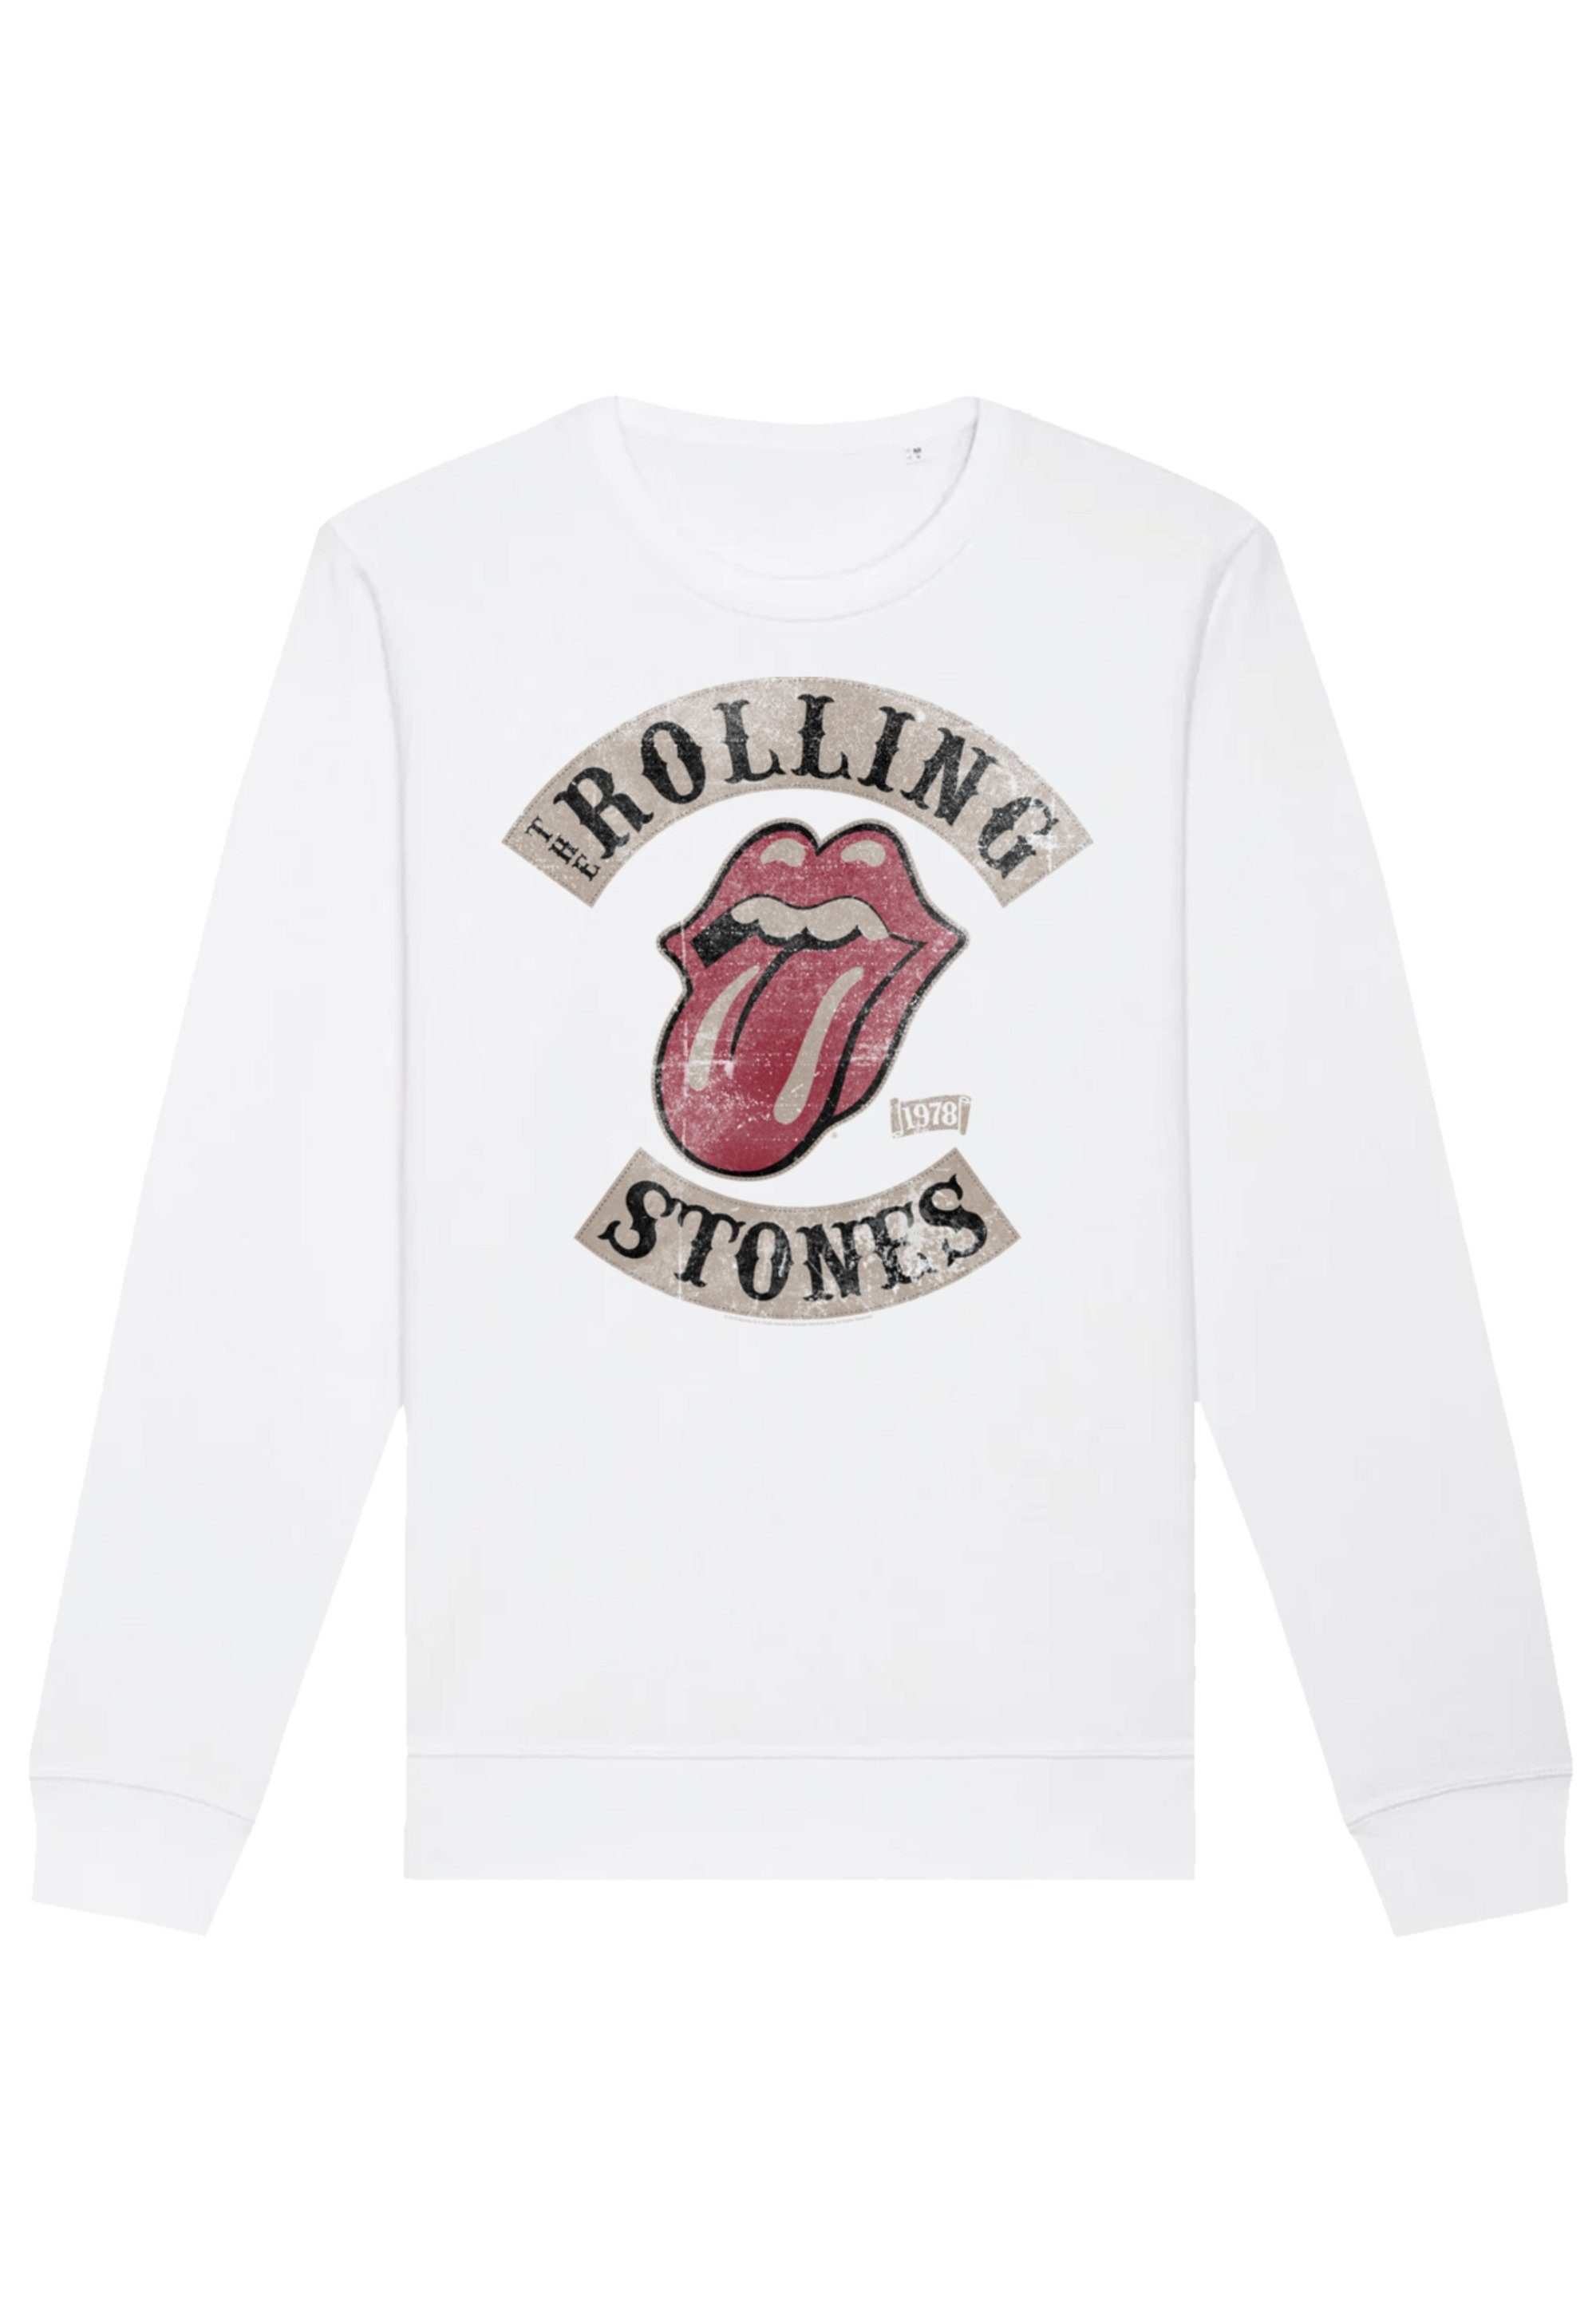 Rolling Print Stones weiß F4NT4STIC Tour Sweatshirt The '78